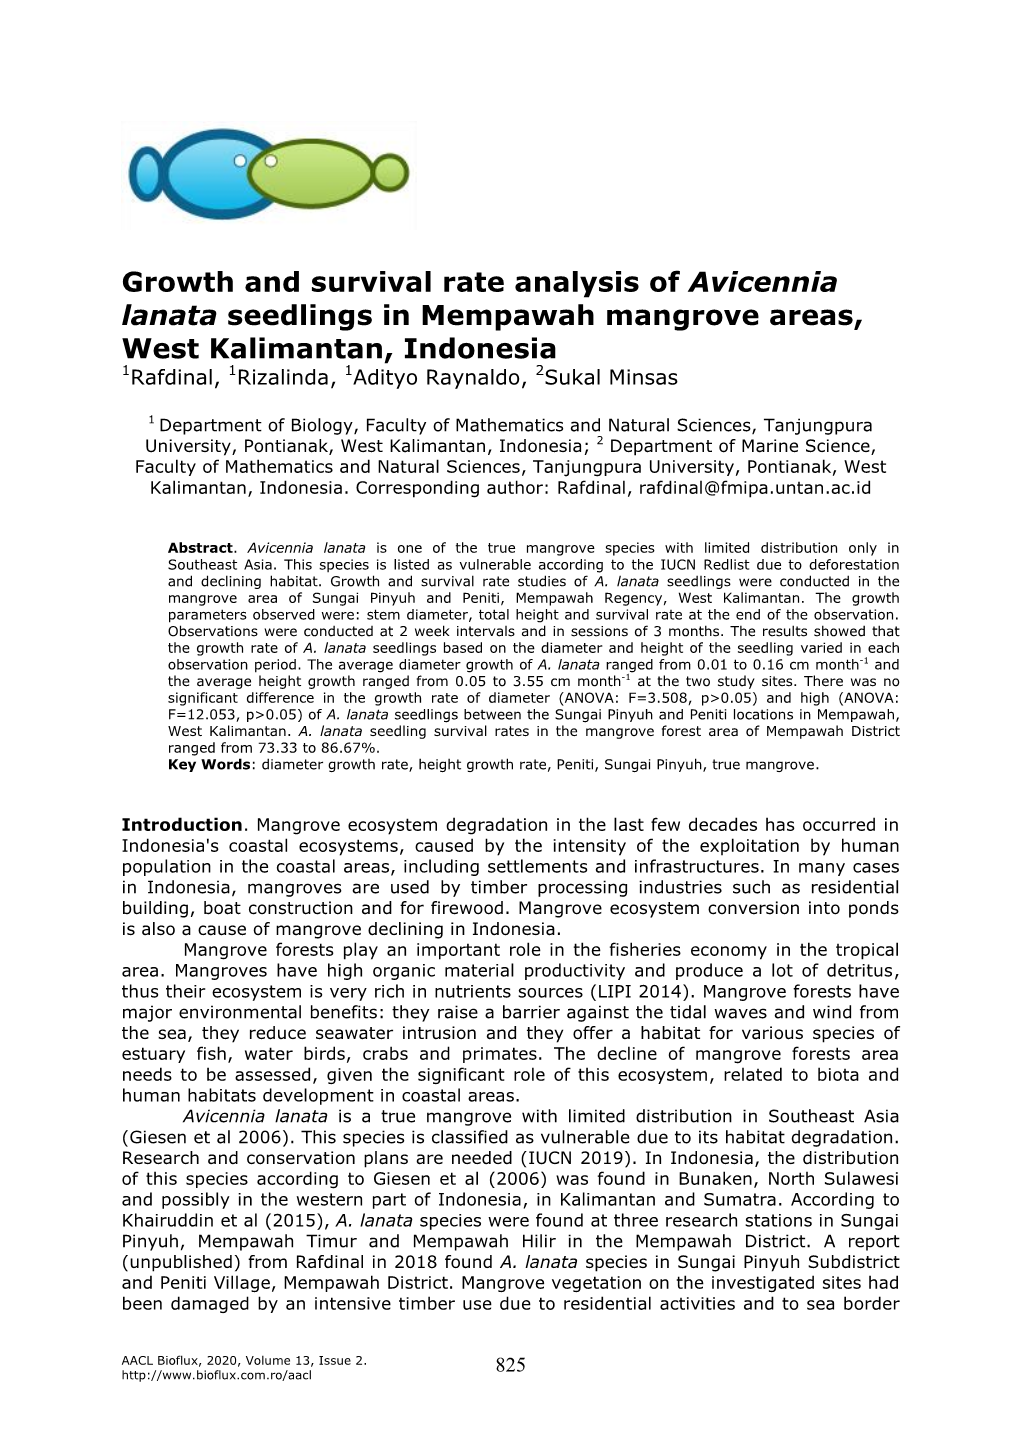 Rafdinal, Rizalinda, Raynaldo A., Minsas S., 2020 Growth And